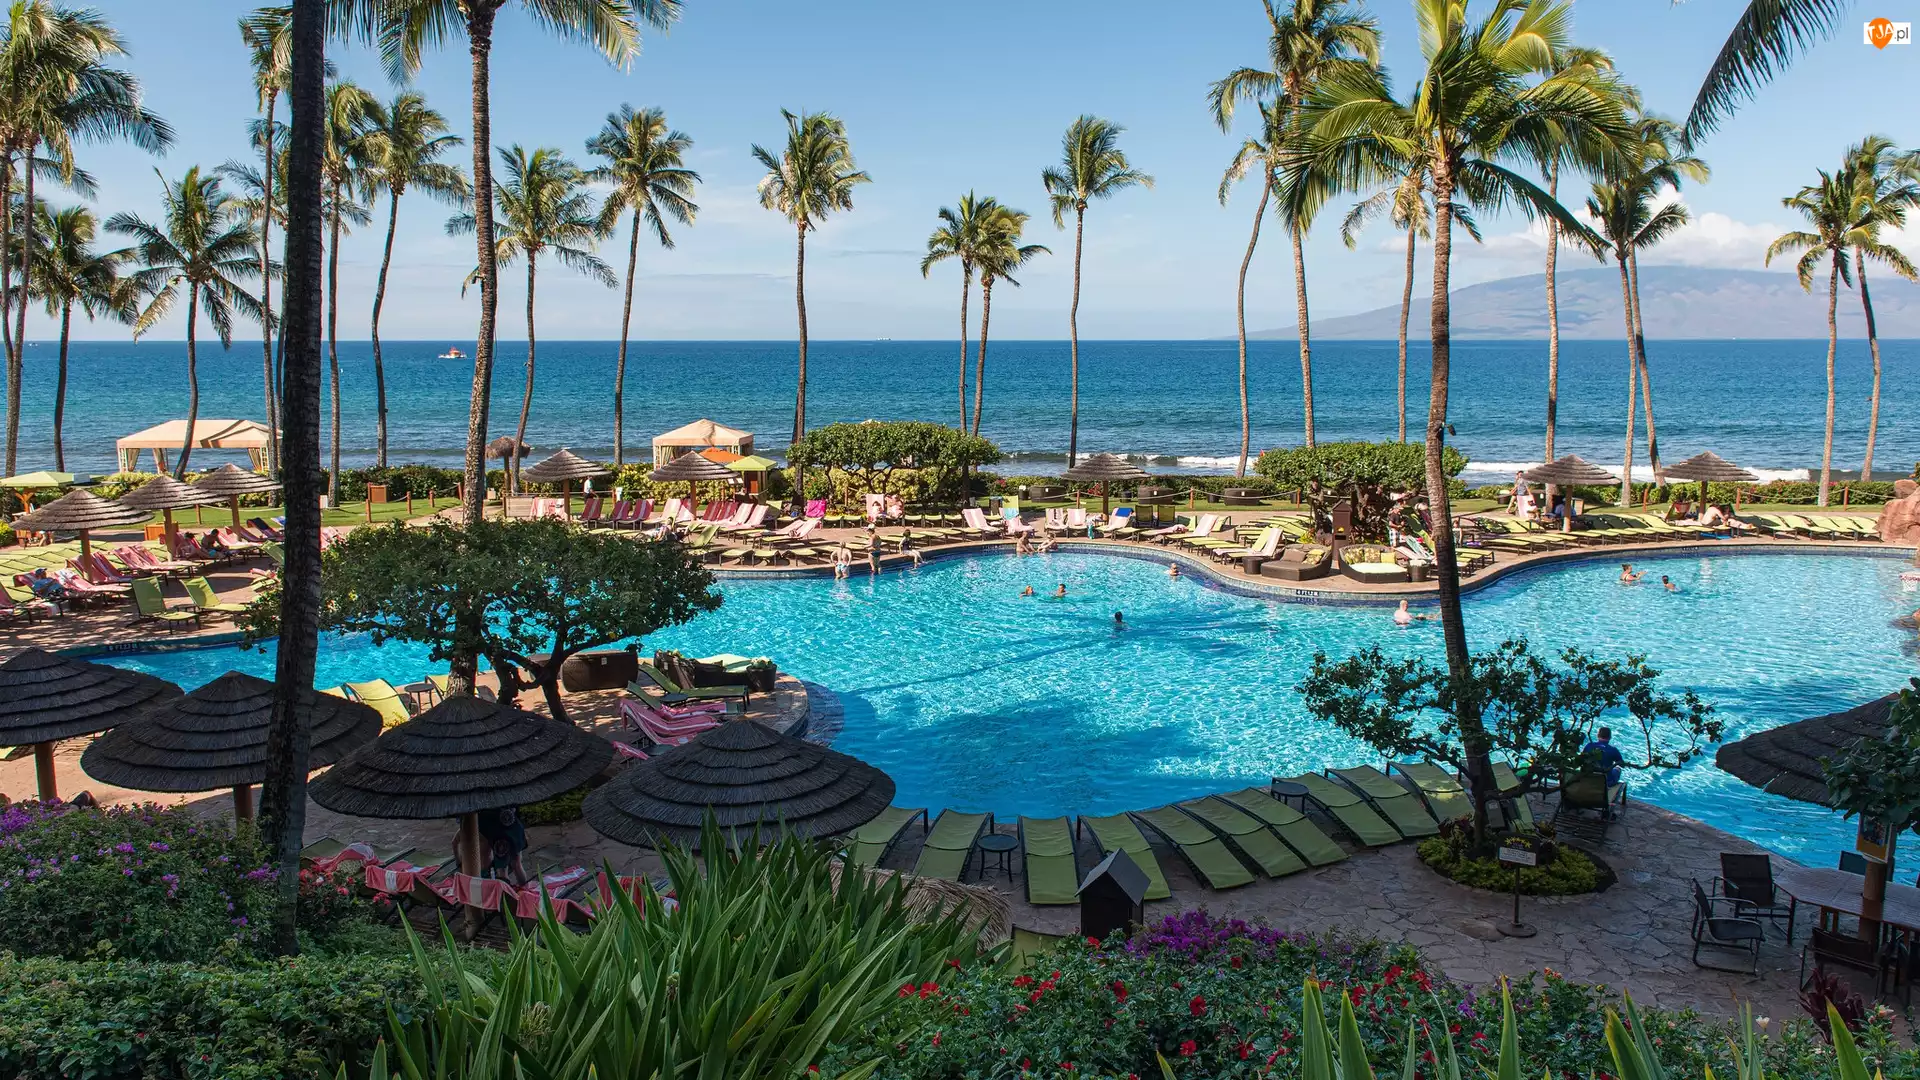 Stany Zjednoczone, Hyatt Regency Maui Resort and Spa, Maui, Hotel, Basen, Morze, Parasole, Palmy, Rośliny, Hawaje